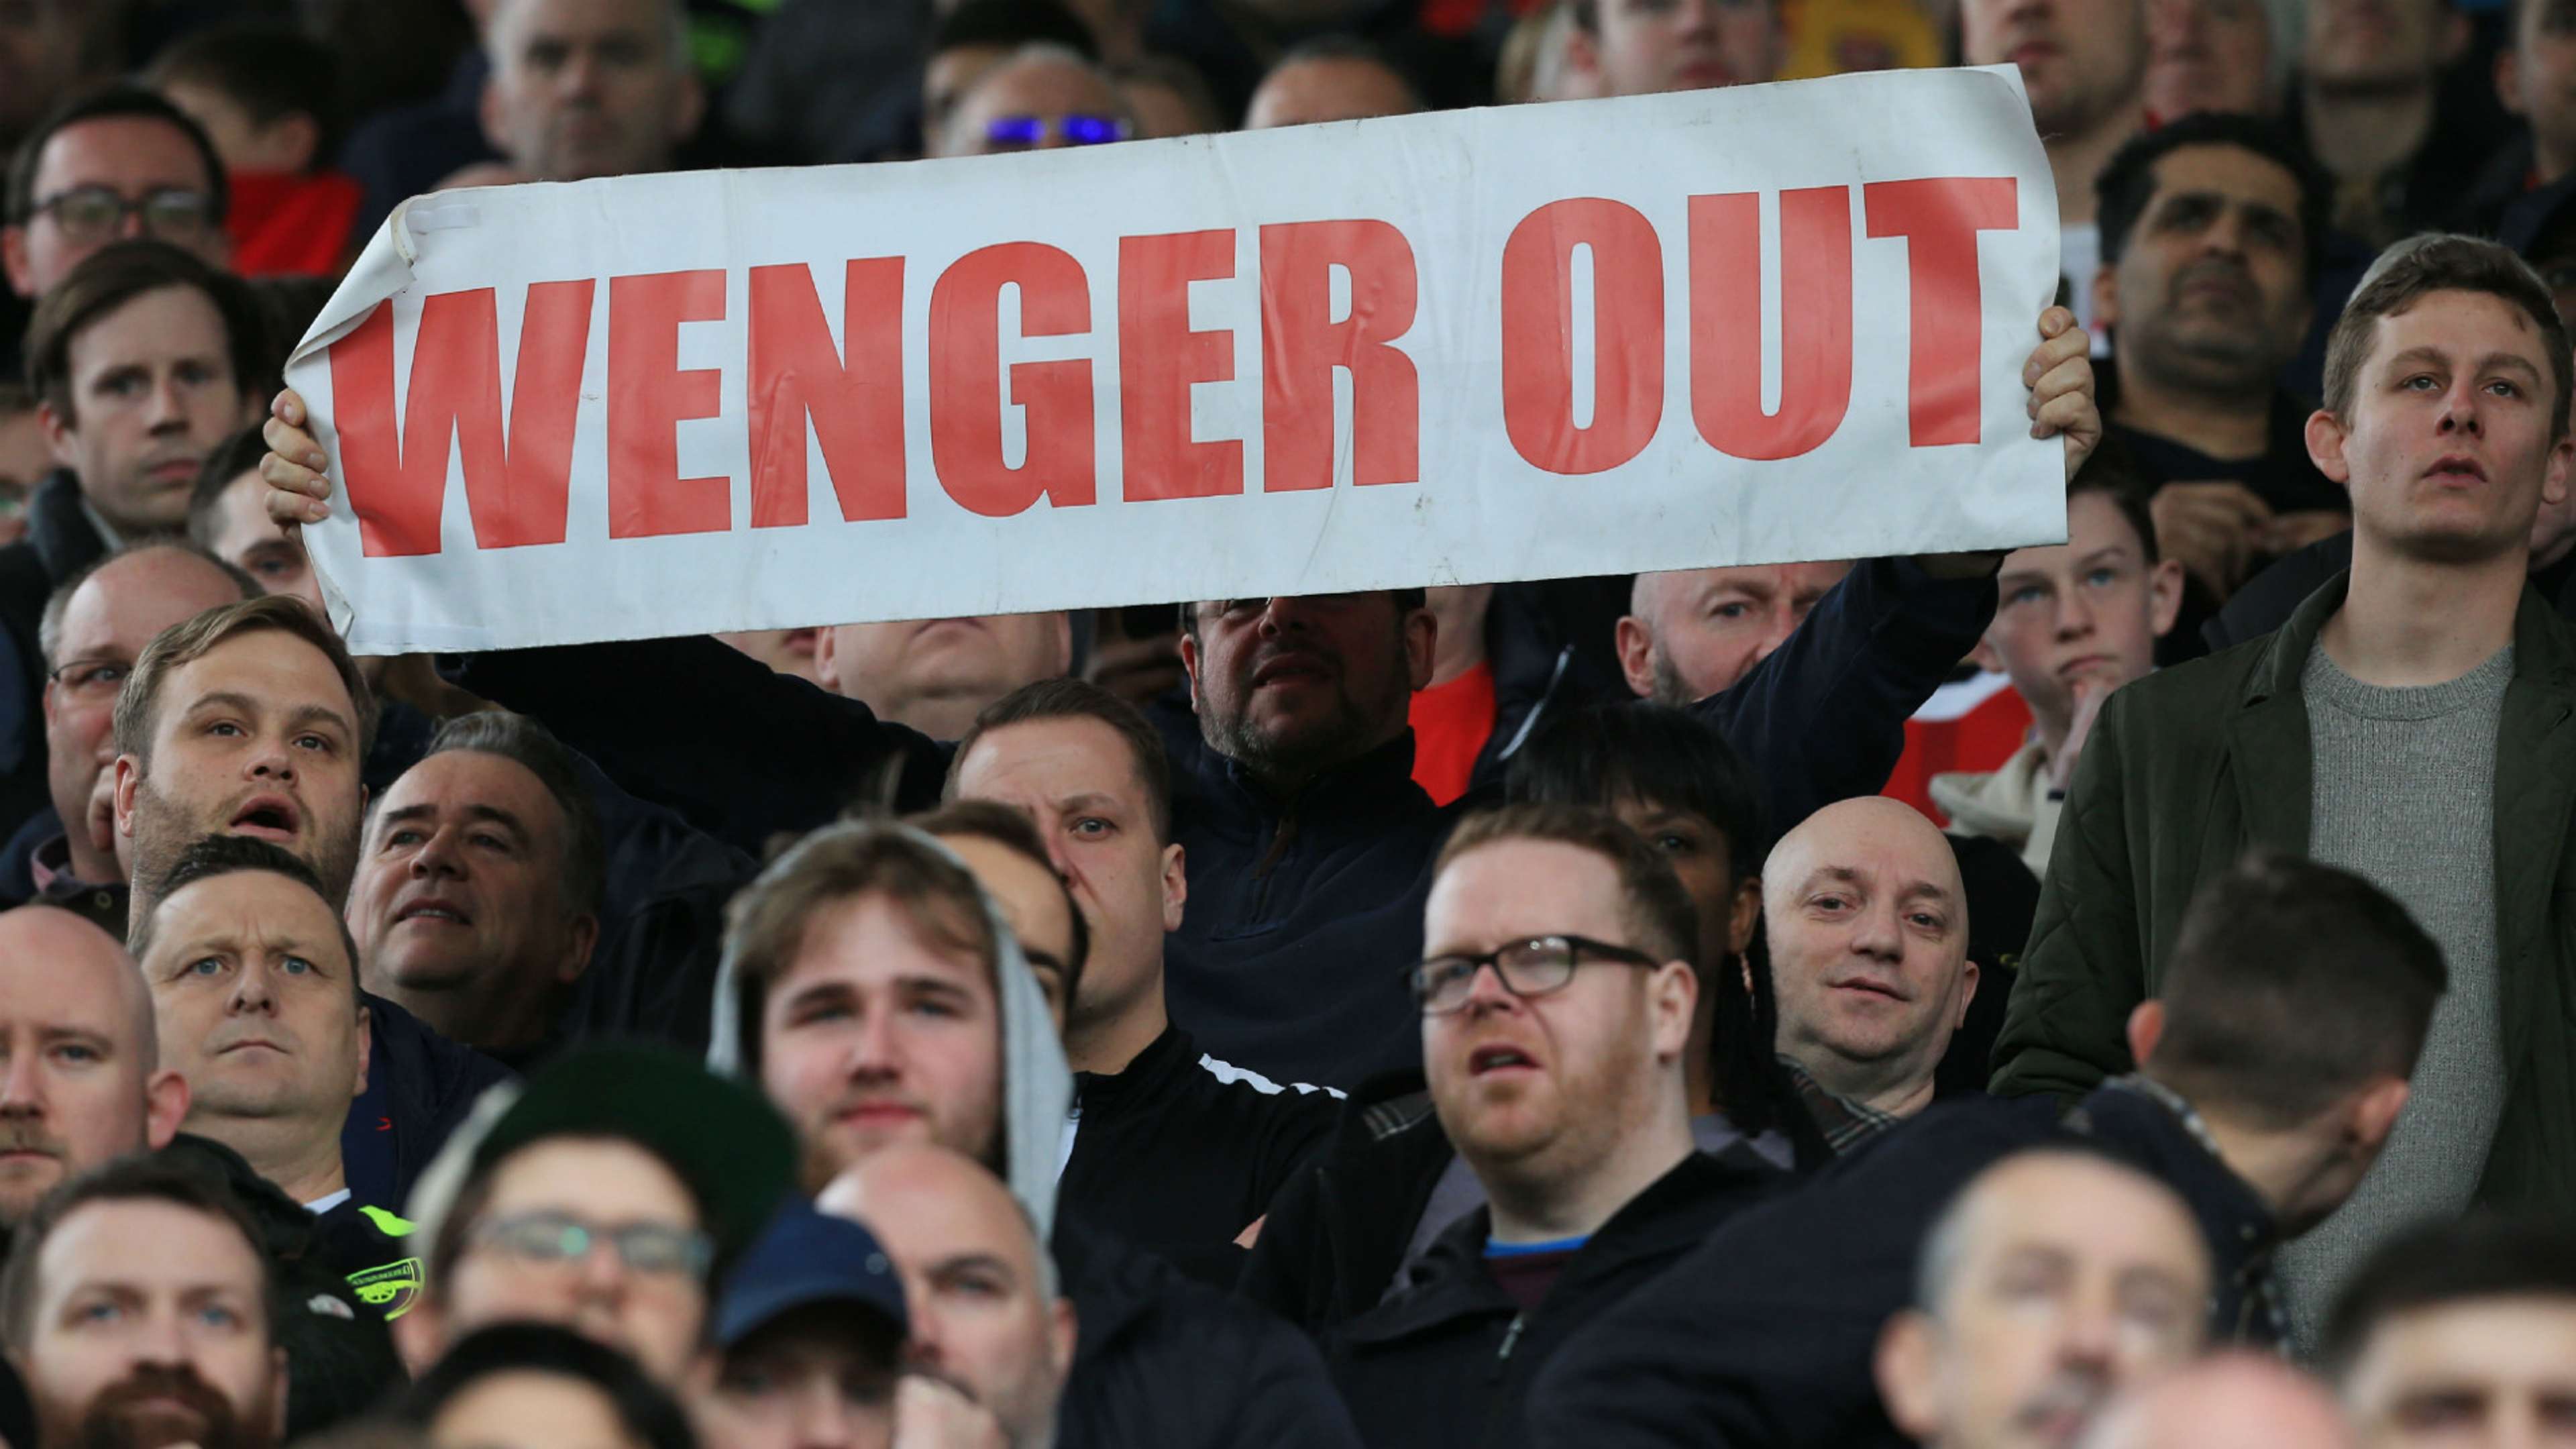 Arsene Wenger Out Banner 2017